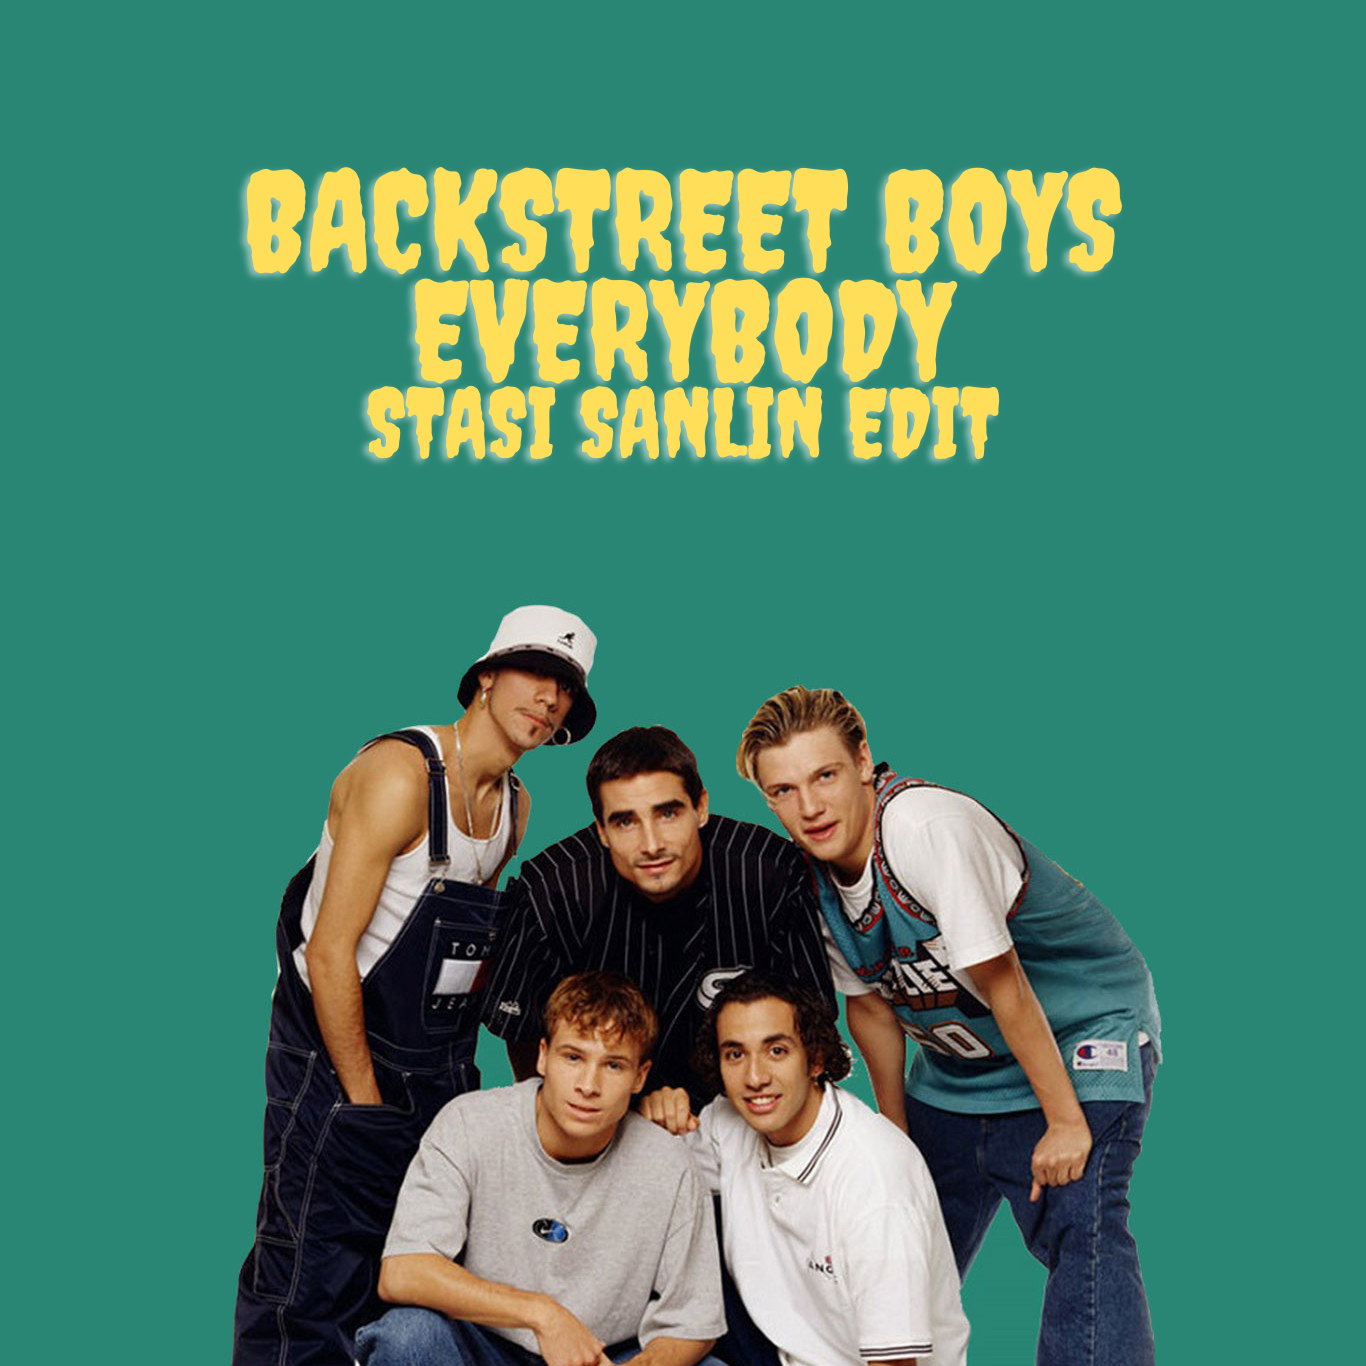 Backstreet boys Everybody. Бэкстрит бойс Everybody. Группа Backstreet boys Everybody. Backstreet boys Everybody альбом. Everybody backstreets back